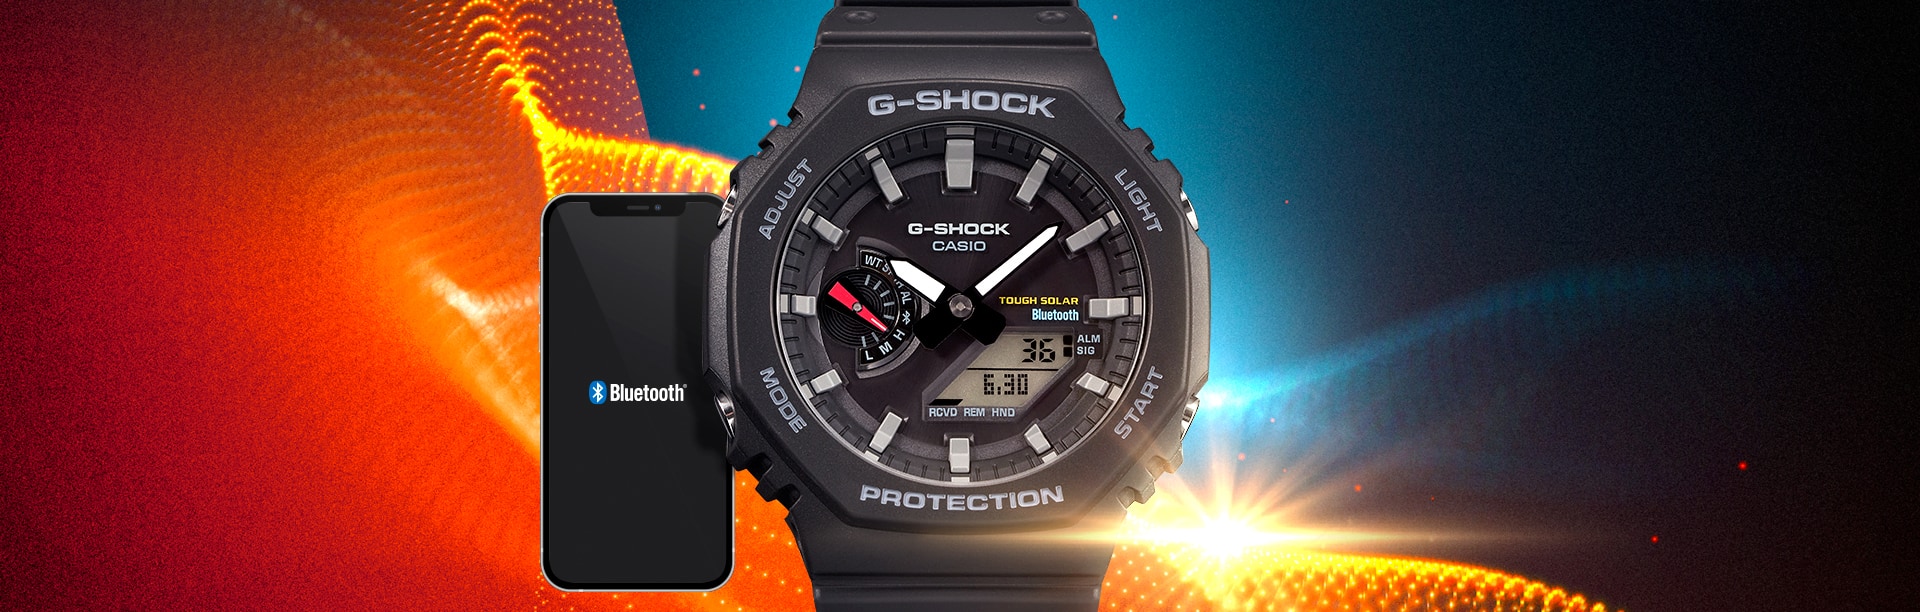 GAB2100 Black G-SHOCK watch